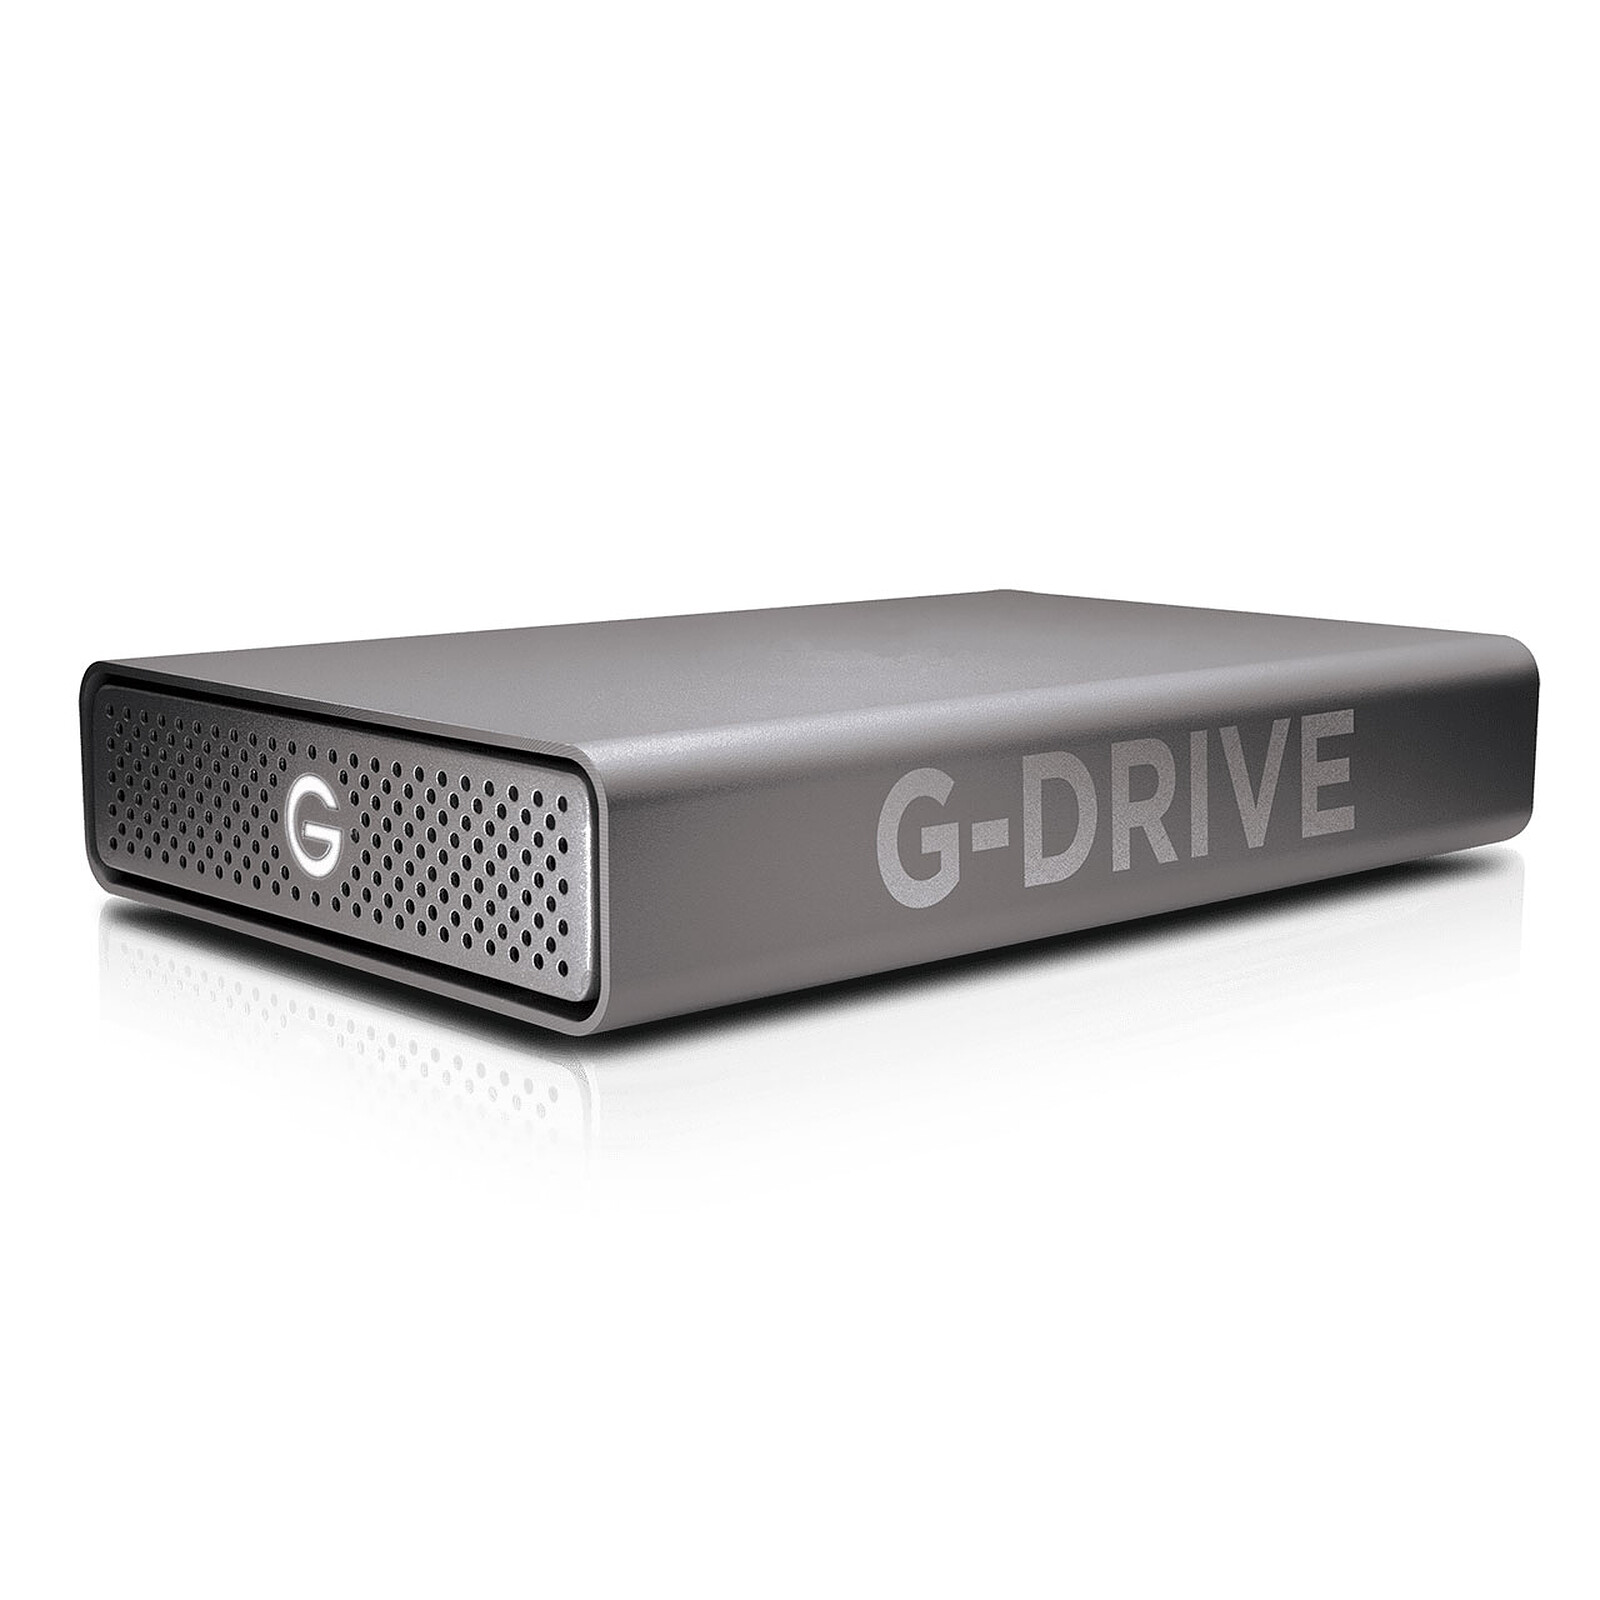 SanDisk Professional G-Drive Desktop HDD 6TB - External hard drive